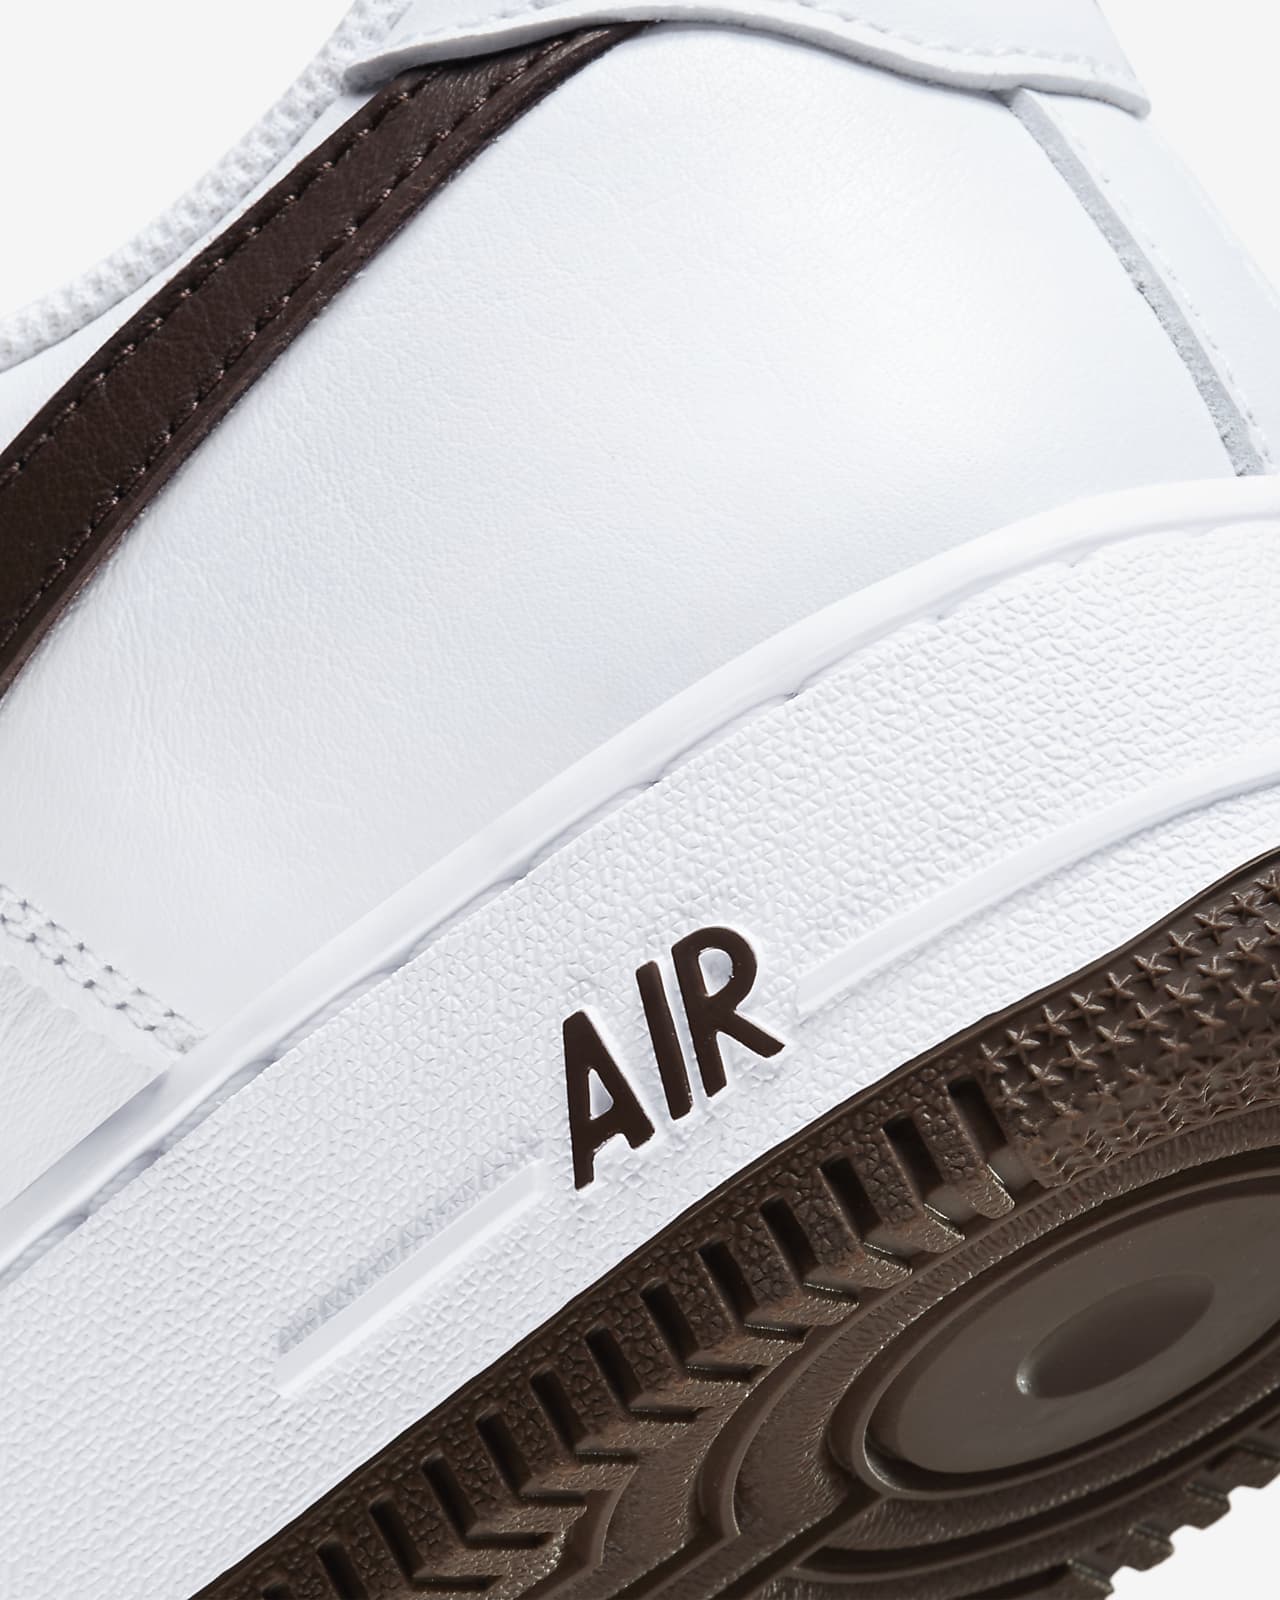 Nike Air Force 1 Low Retro (DM0576-100) White/Chocolate / 9